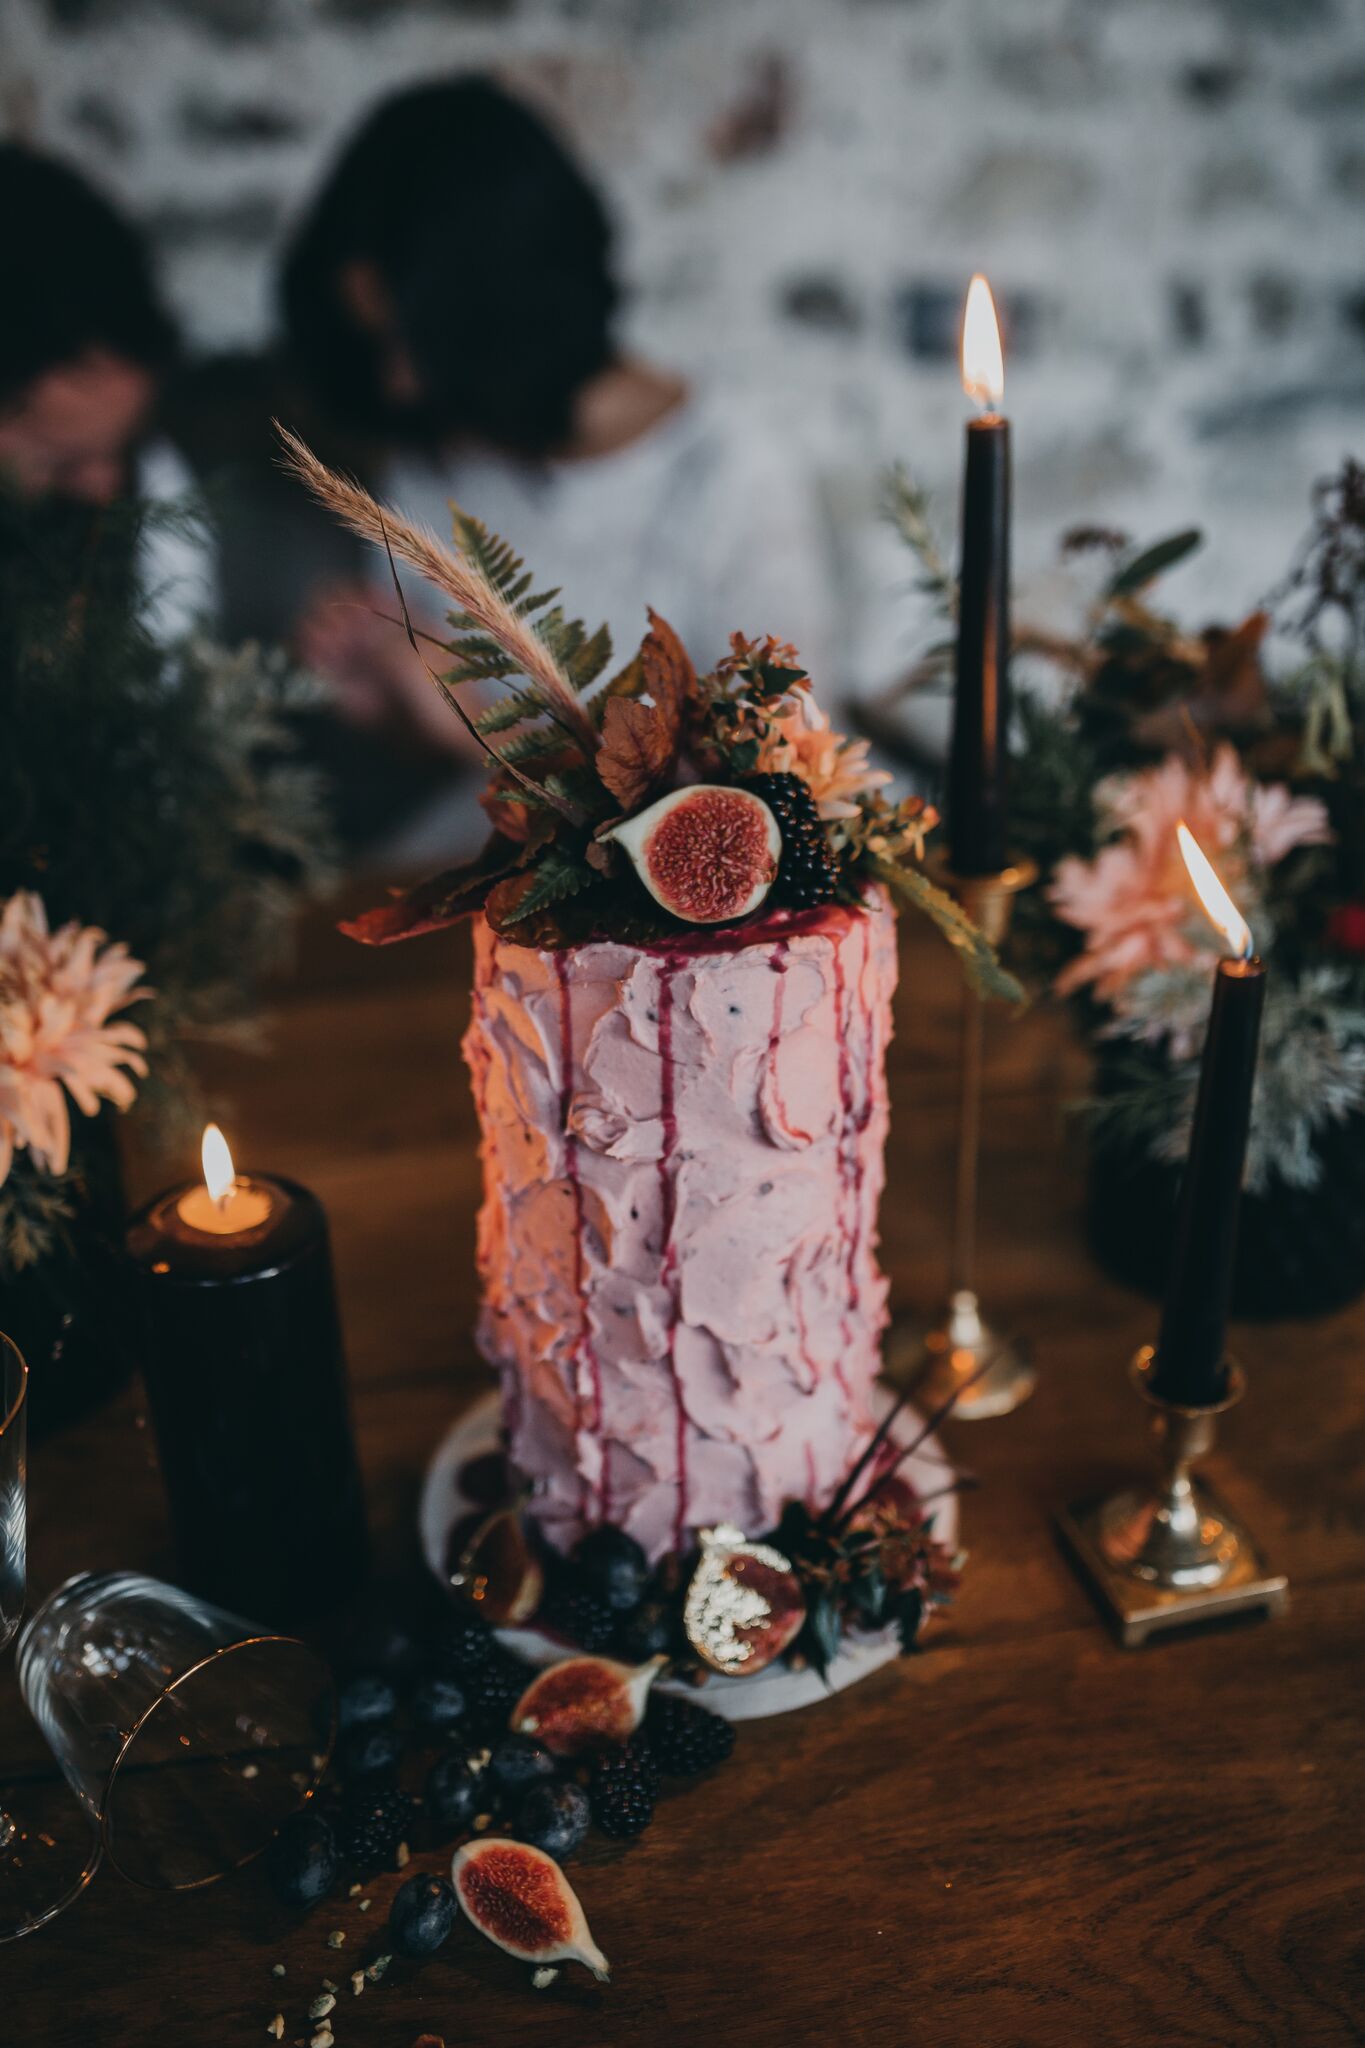 Where the Ribbon Ends - Alternative wedding cake - Creative wedding cake 2